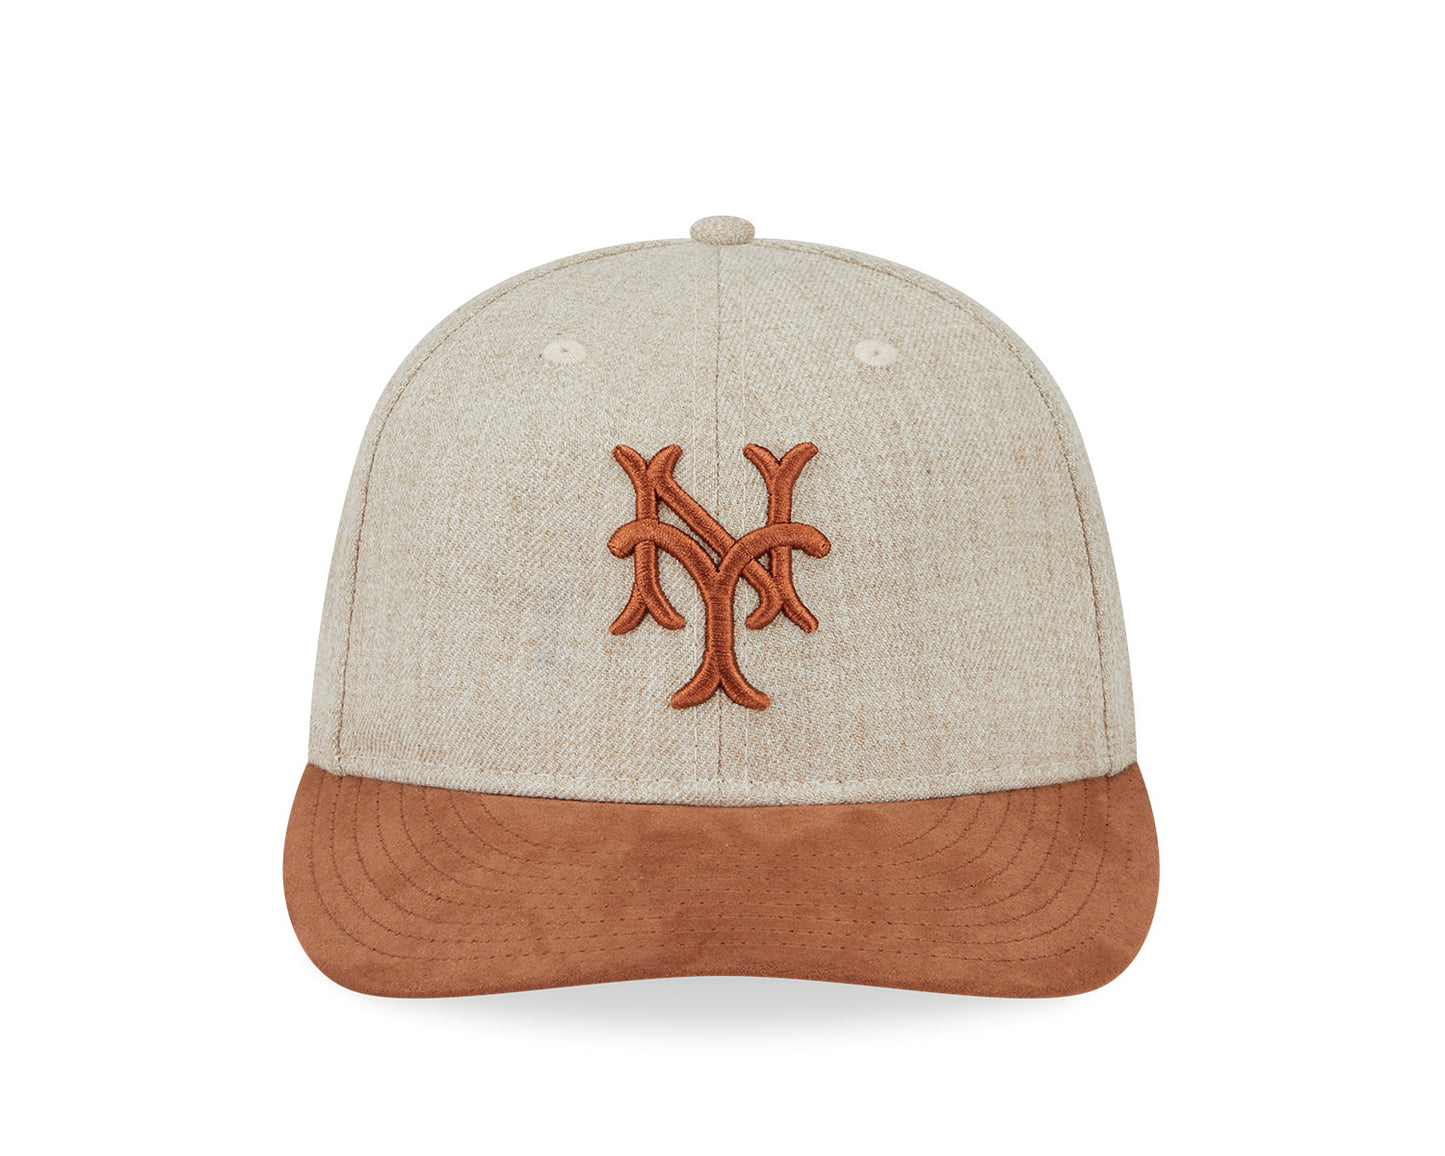 New Era - 9Fifty Retro Crown - New York Mets 2-Tone Marl - Grey/Brown - Headz Up 